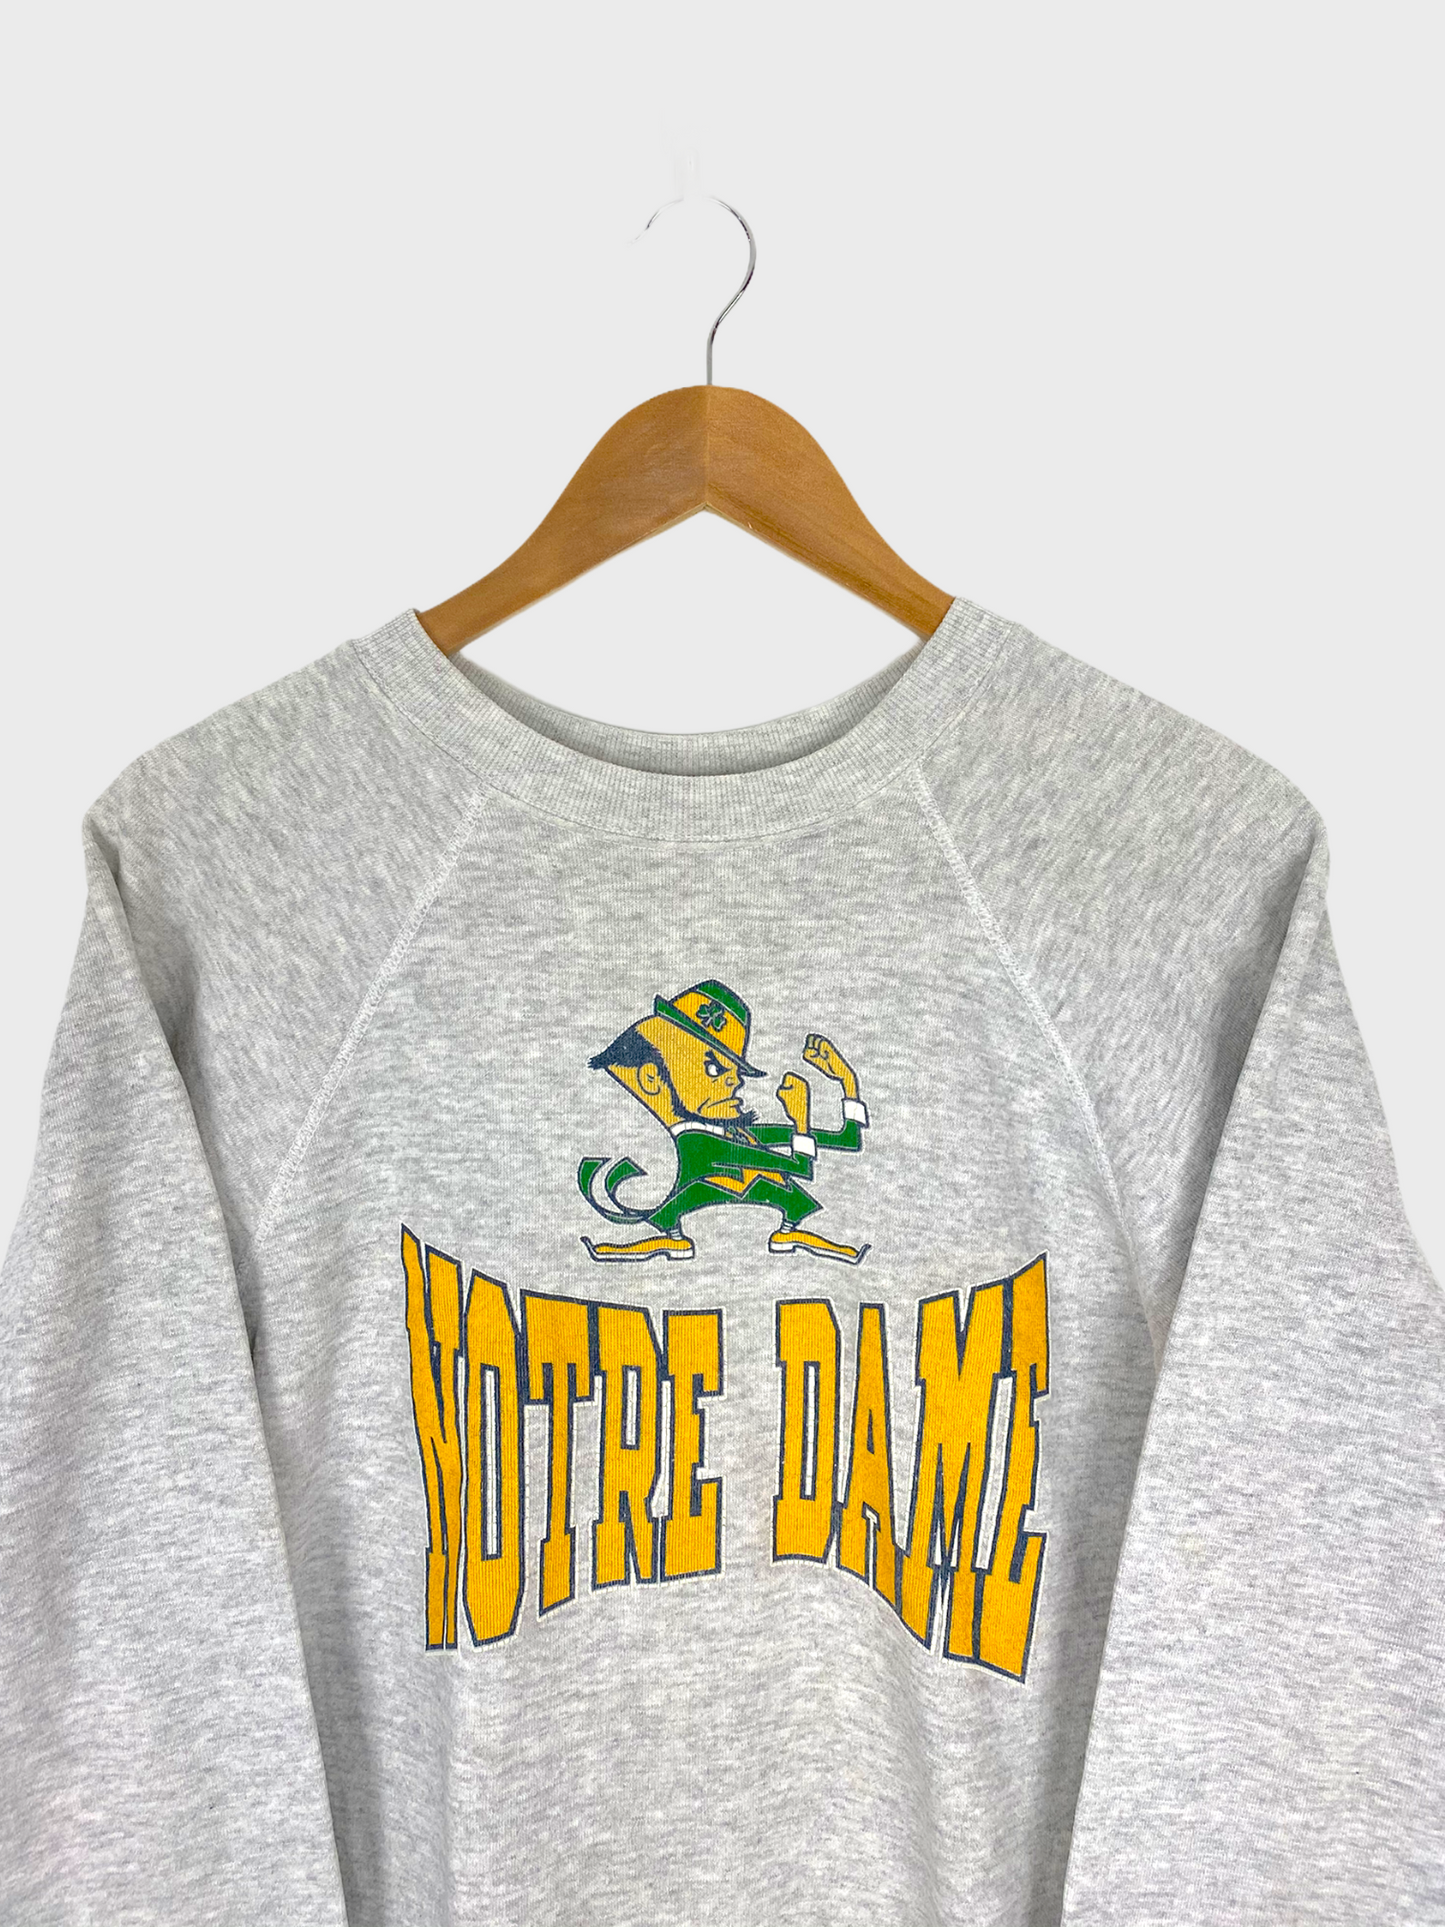 Notre Dame University Vintage Sweatshirt Size 6-8